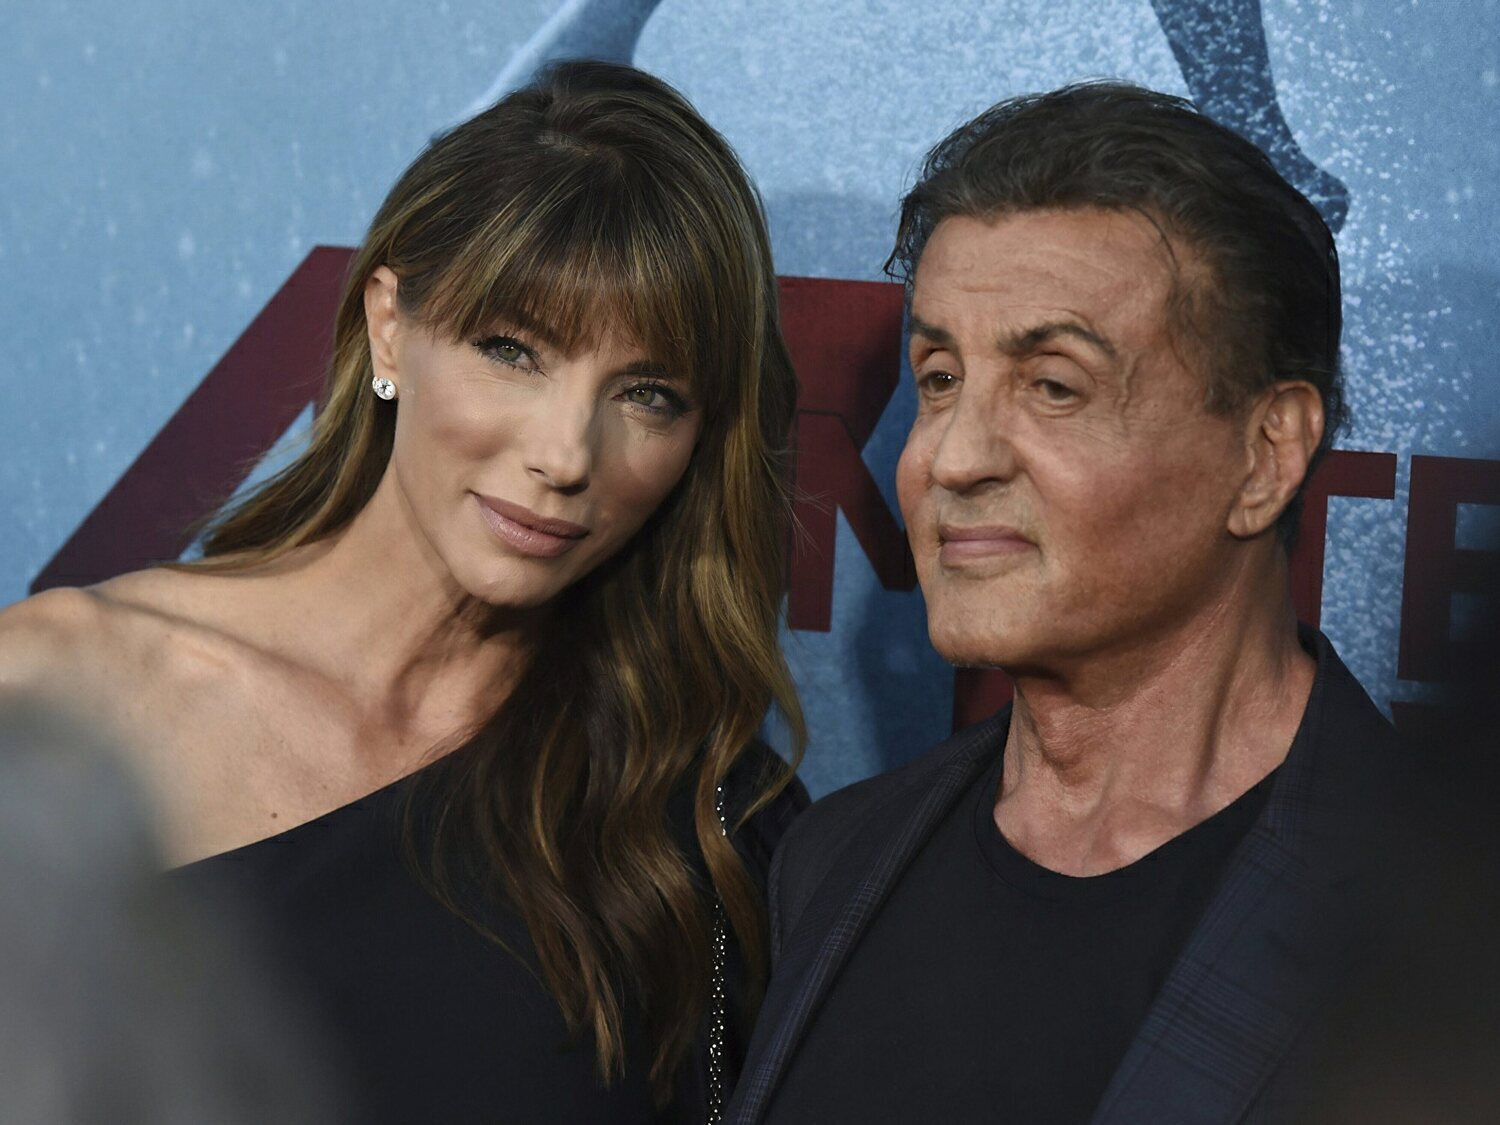 Sylvester Stallone y Jennifer Flavin se divorcian tras 25 años de matrimonio